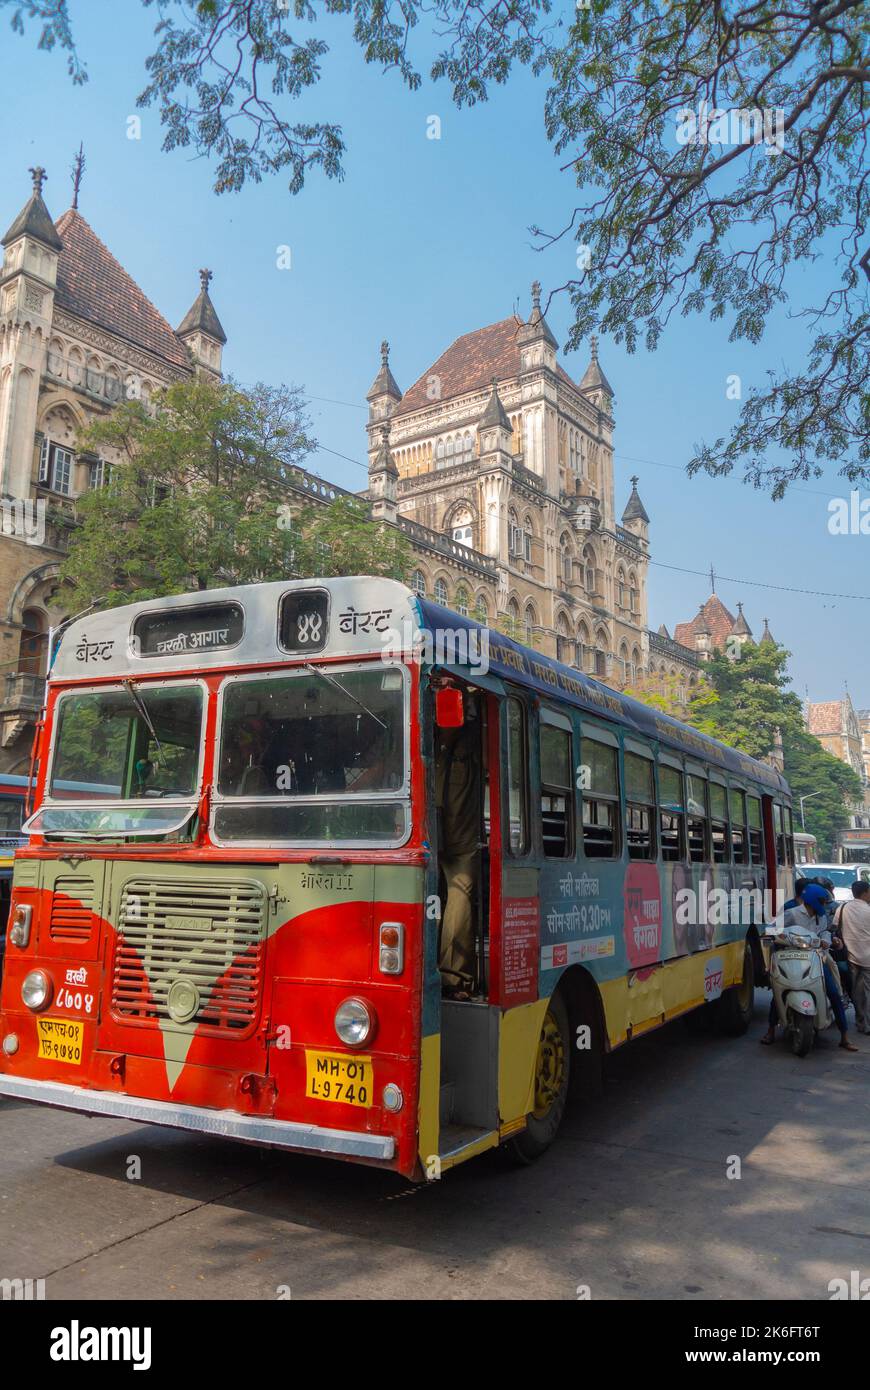 Mumbai, Maharashtra, India meridionale, 31th dicembre 2019: Autobus pubblici per strada Foto Stock